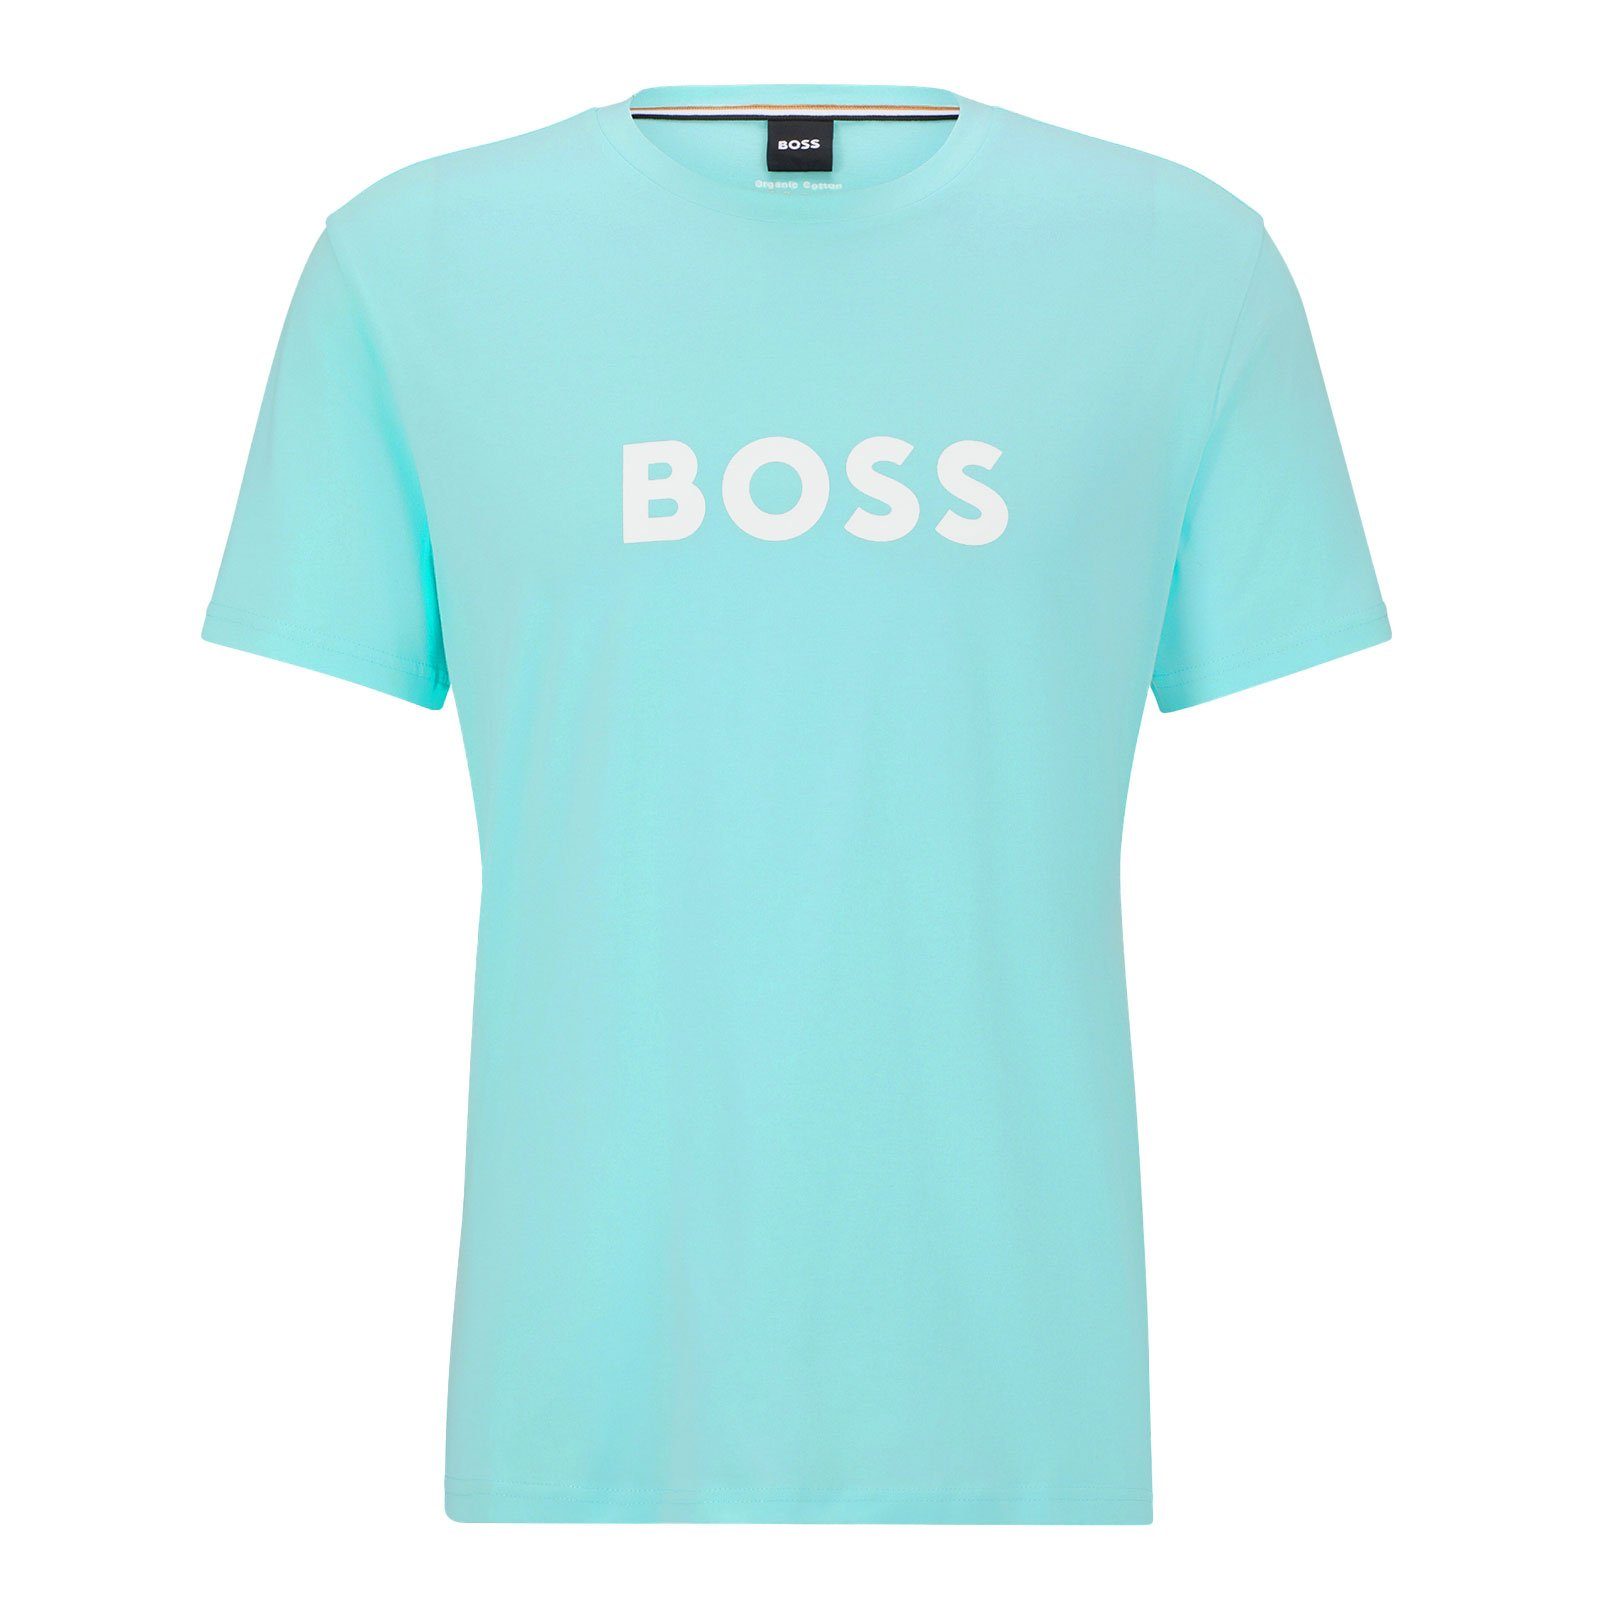 BOSS 356 Markenprint auf der RN green open T-Shirt mit Brust T-Shirt großem